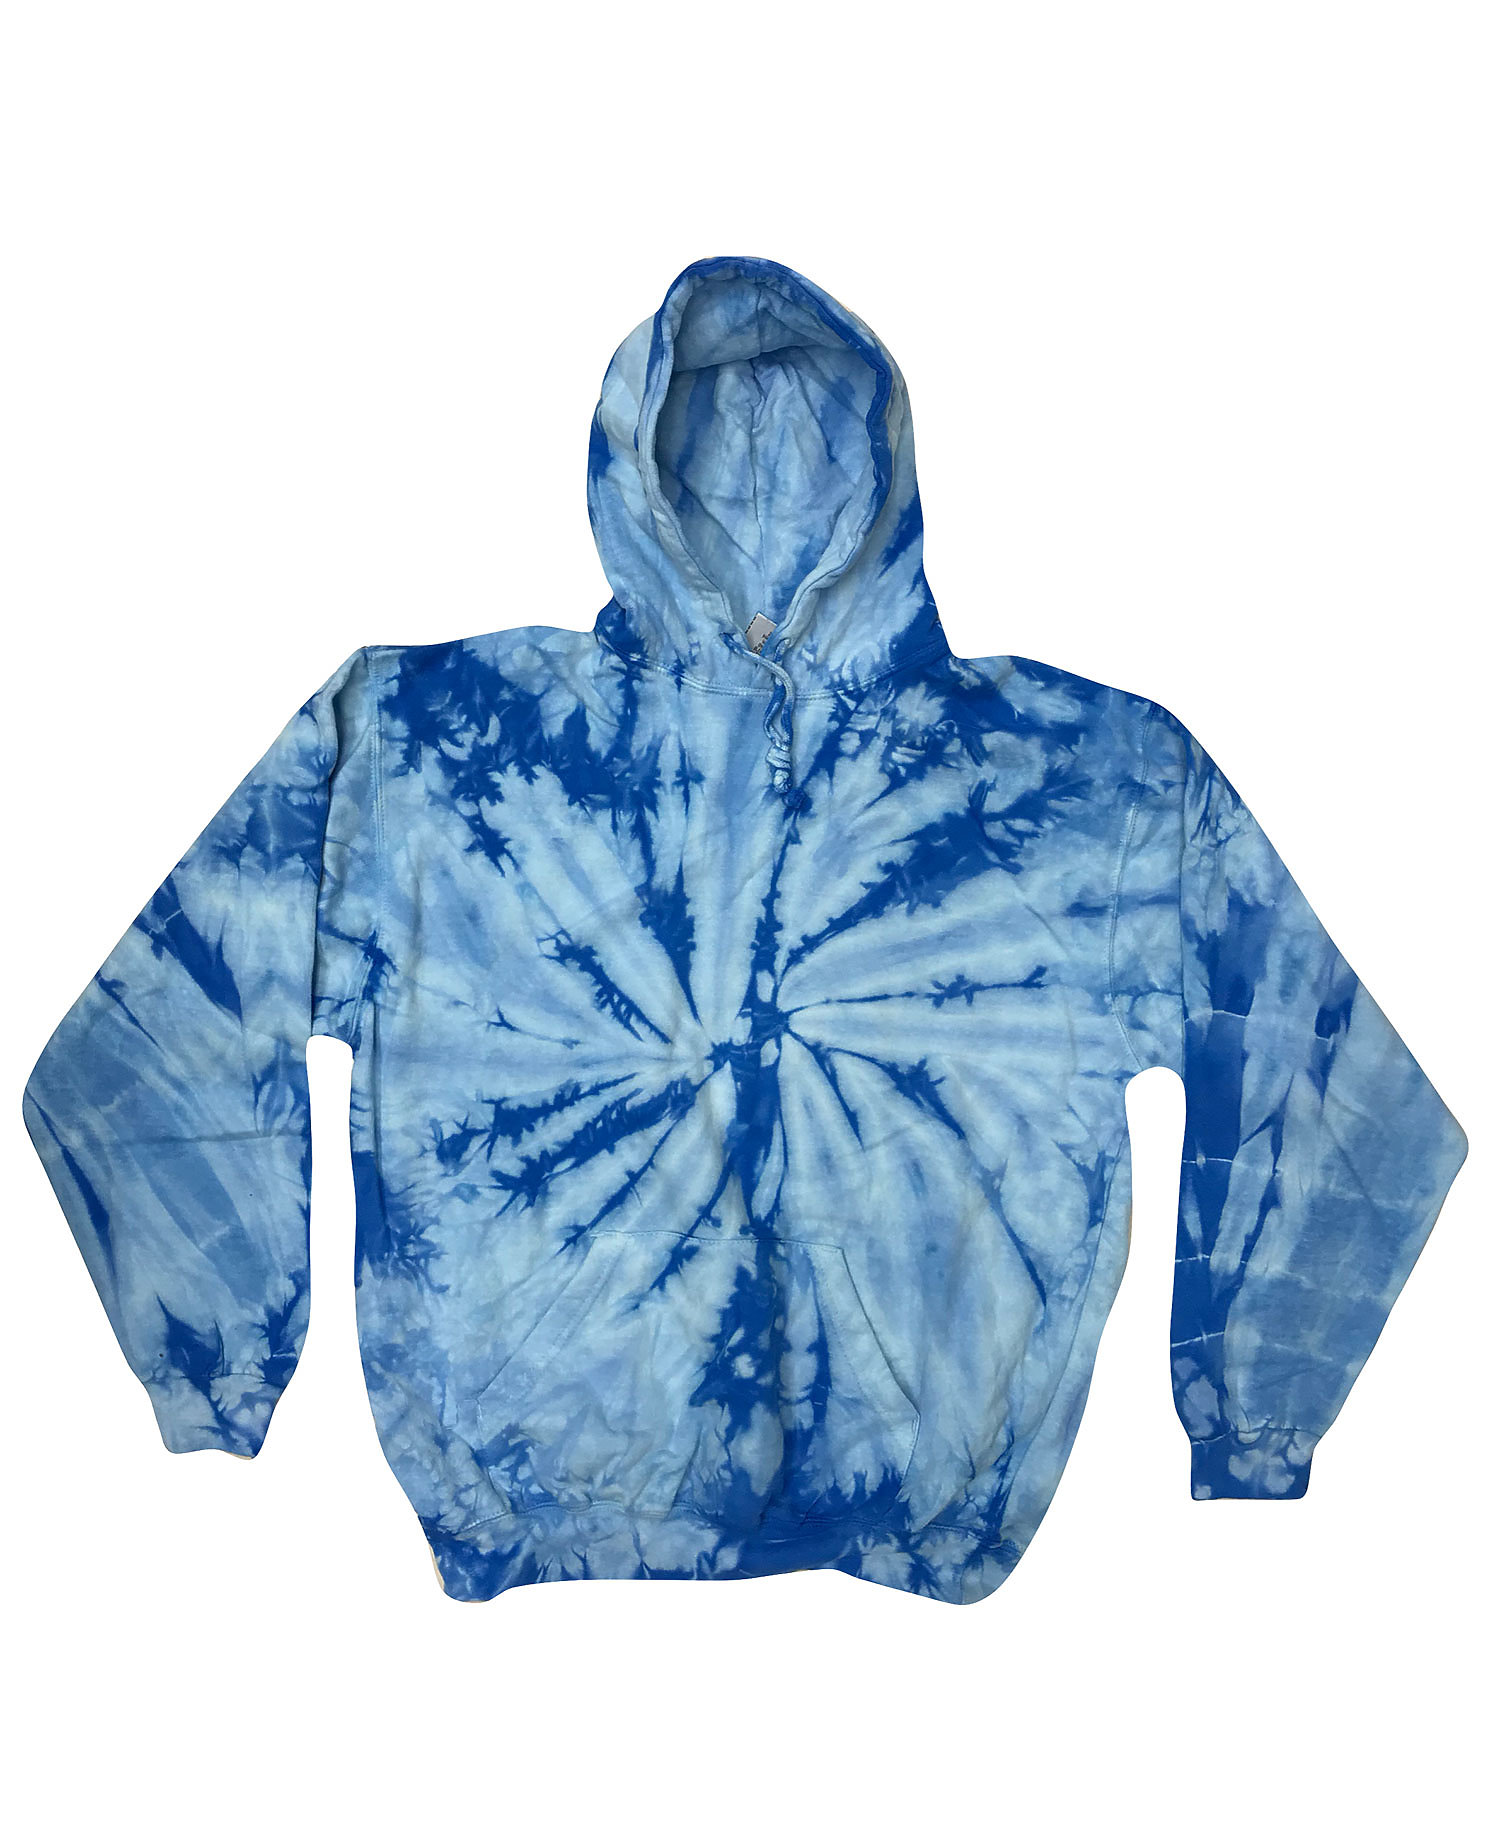 Colortone 8777 - Adult Tie Dye Hooded Pullover $26.05 - Sweatshirts